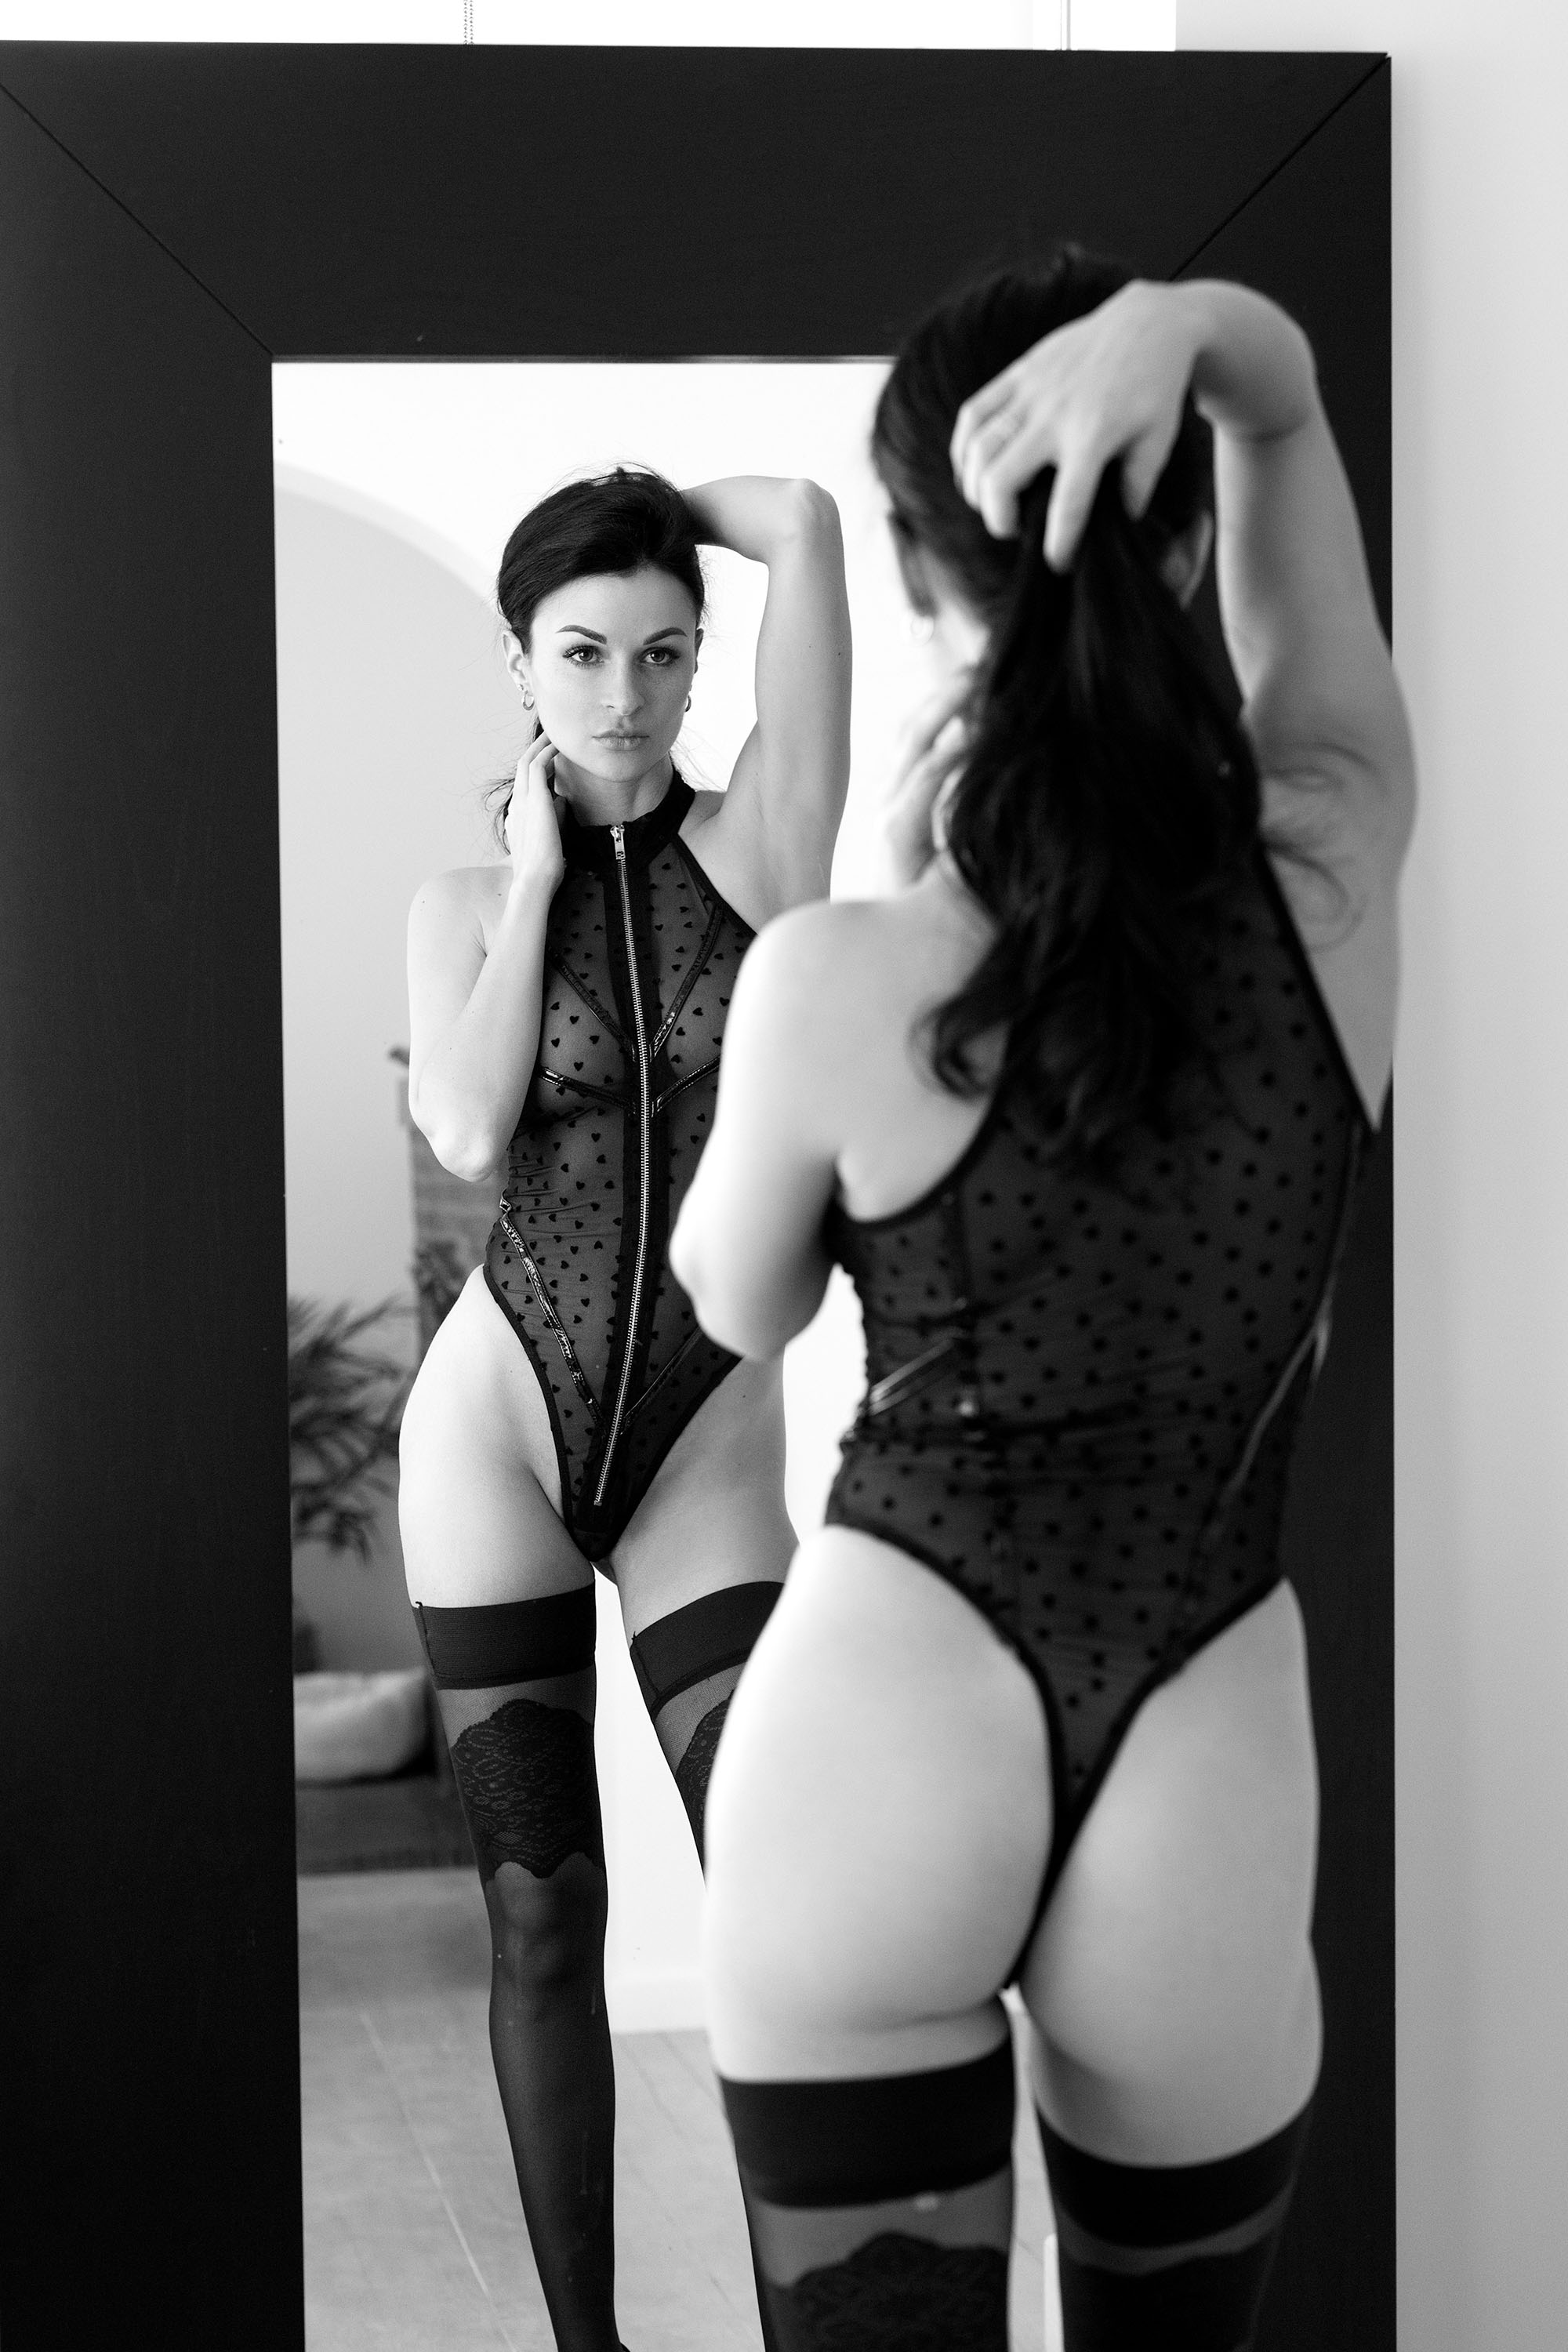 Xenia Inez, model from Belgium at a boudoir photoshoot